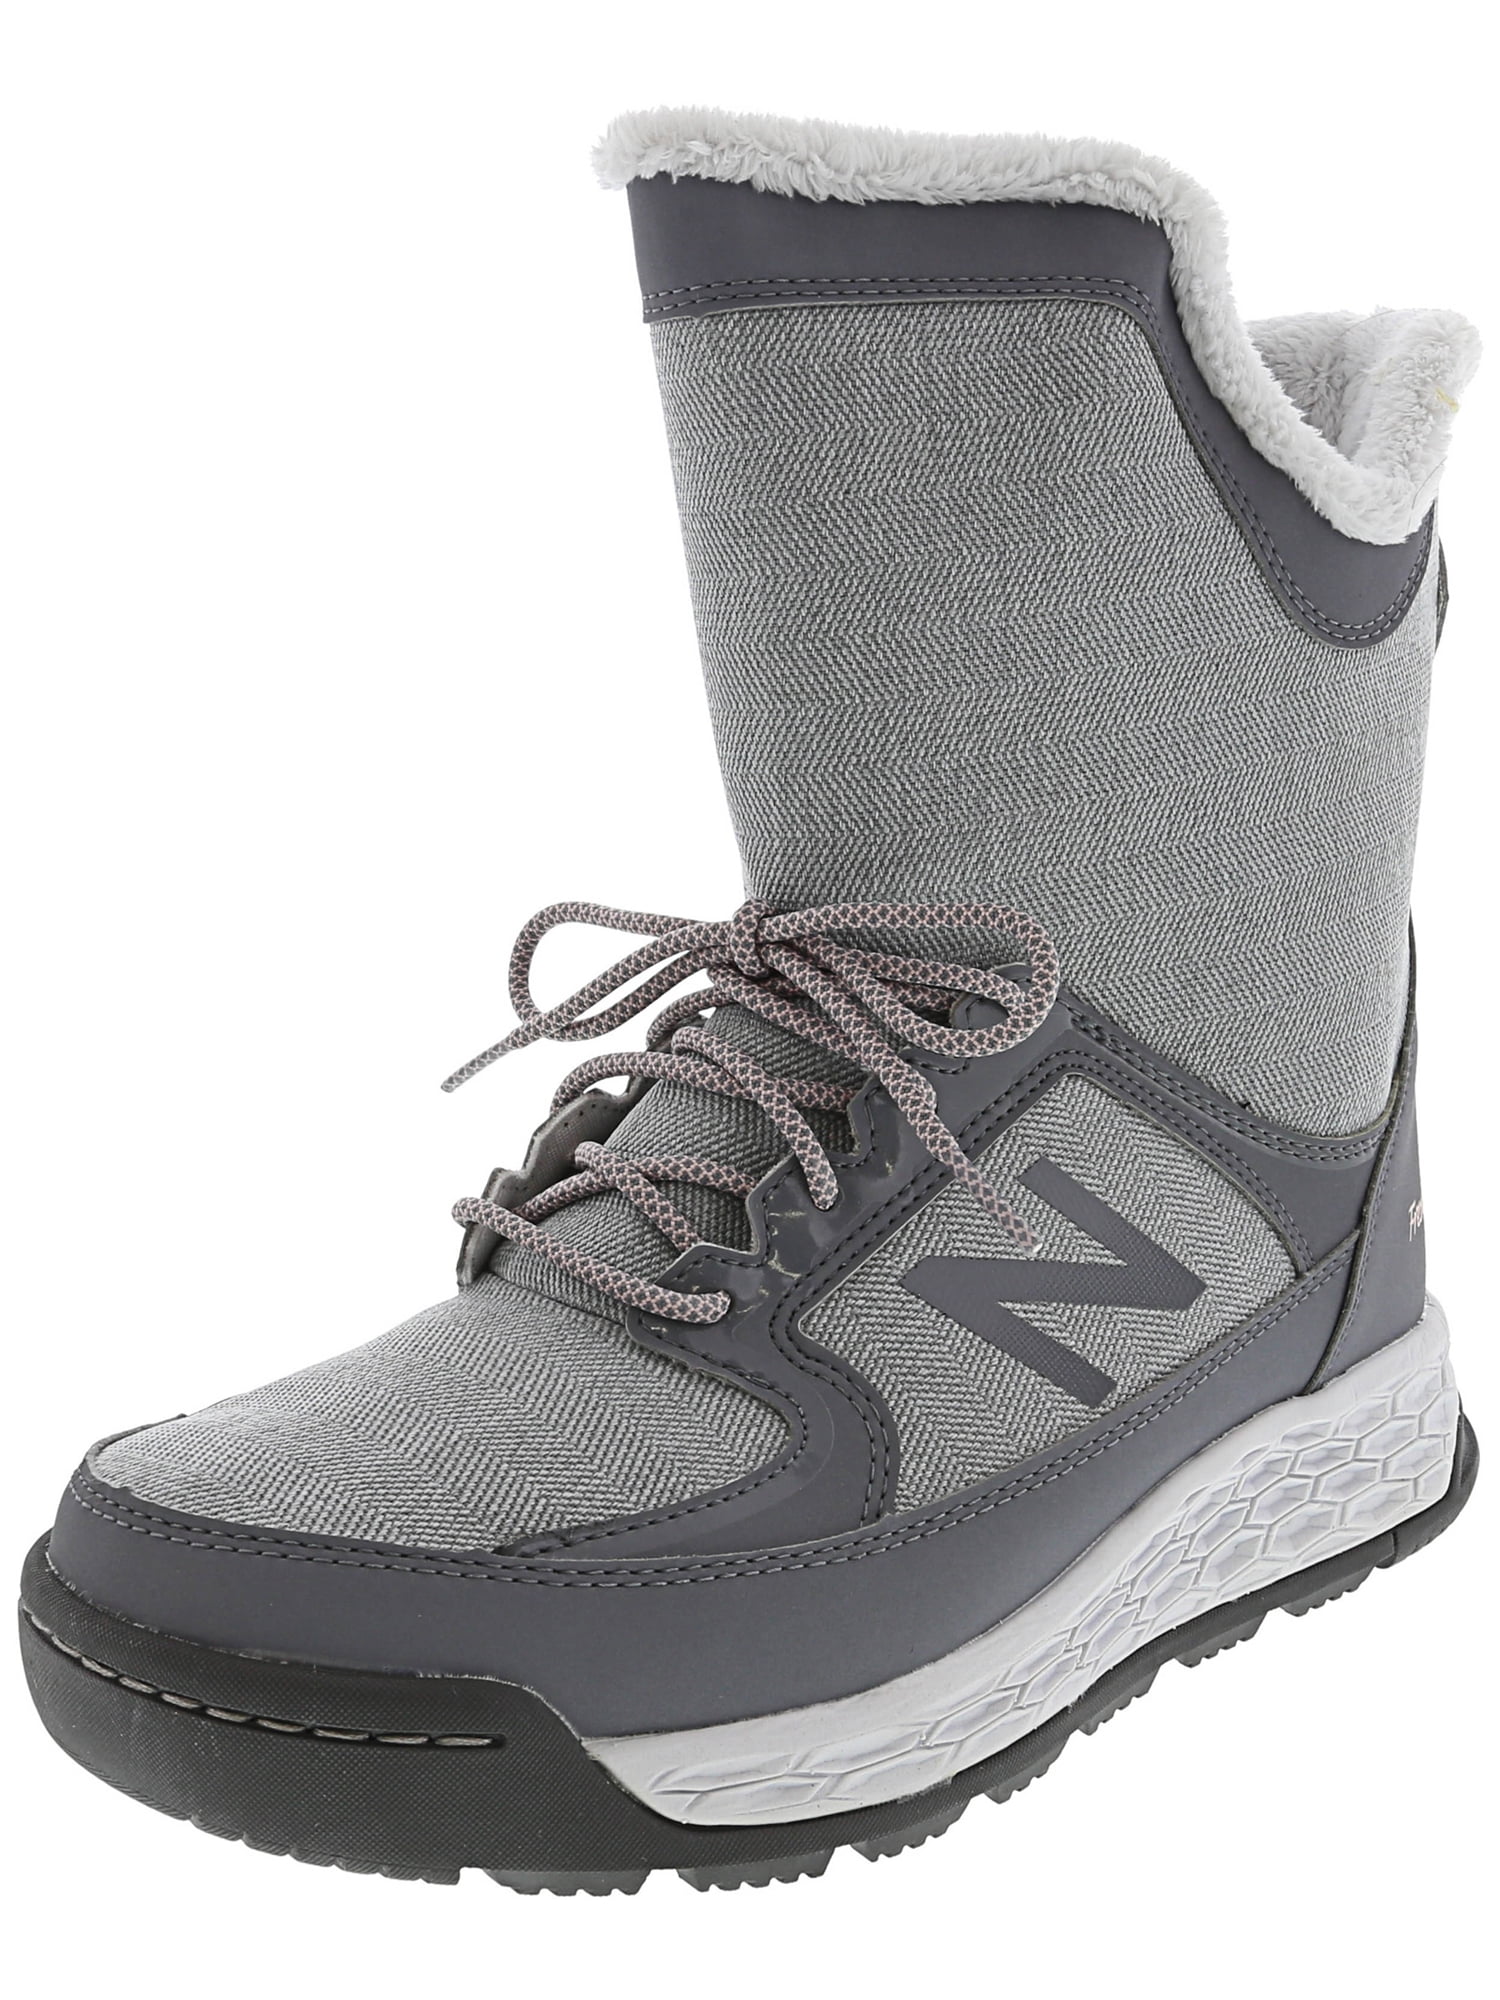 new balance winter boots canada